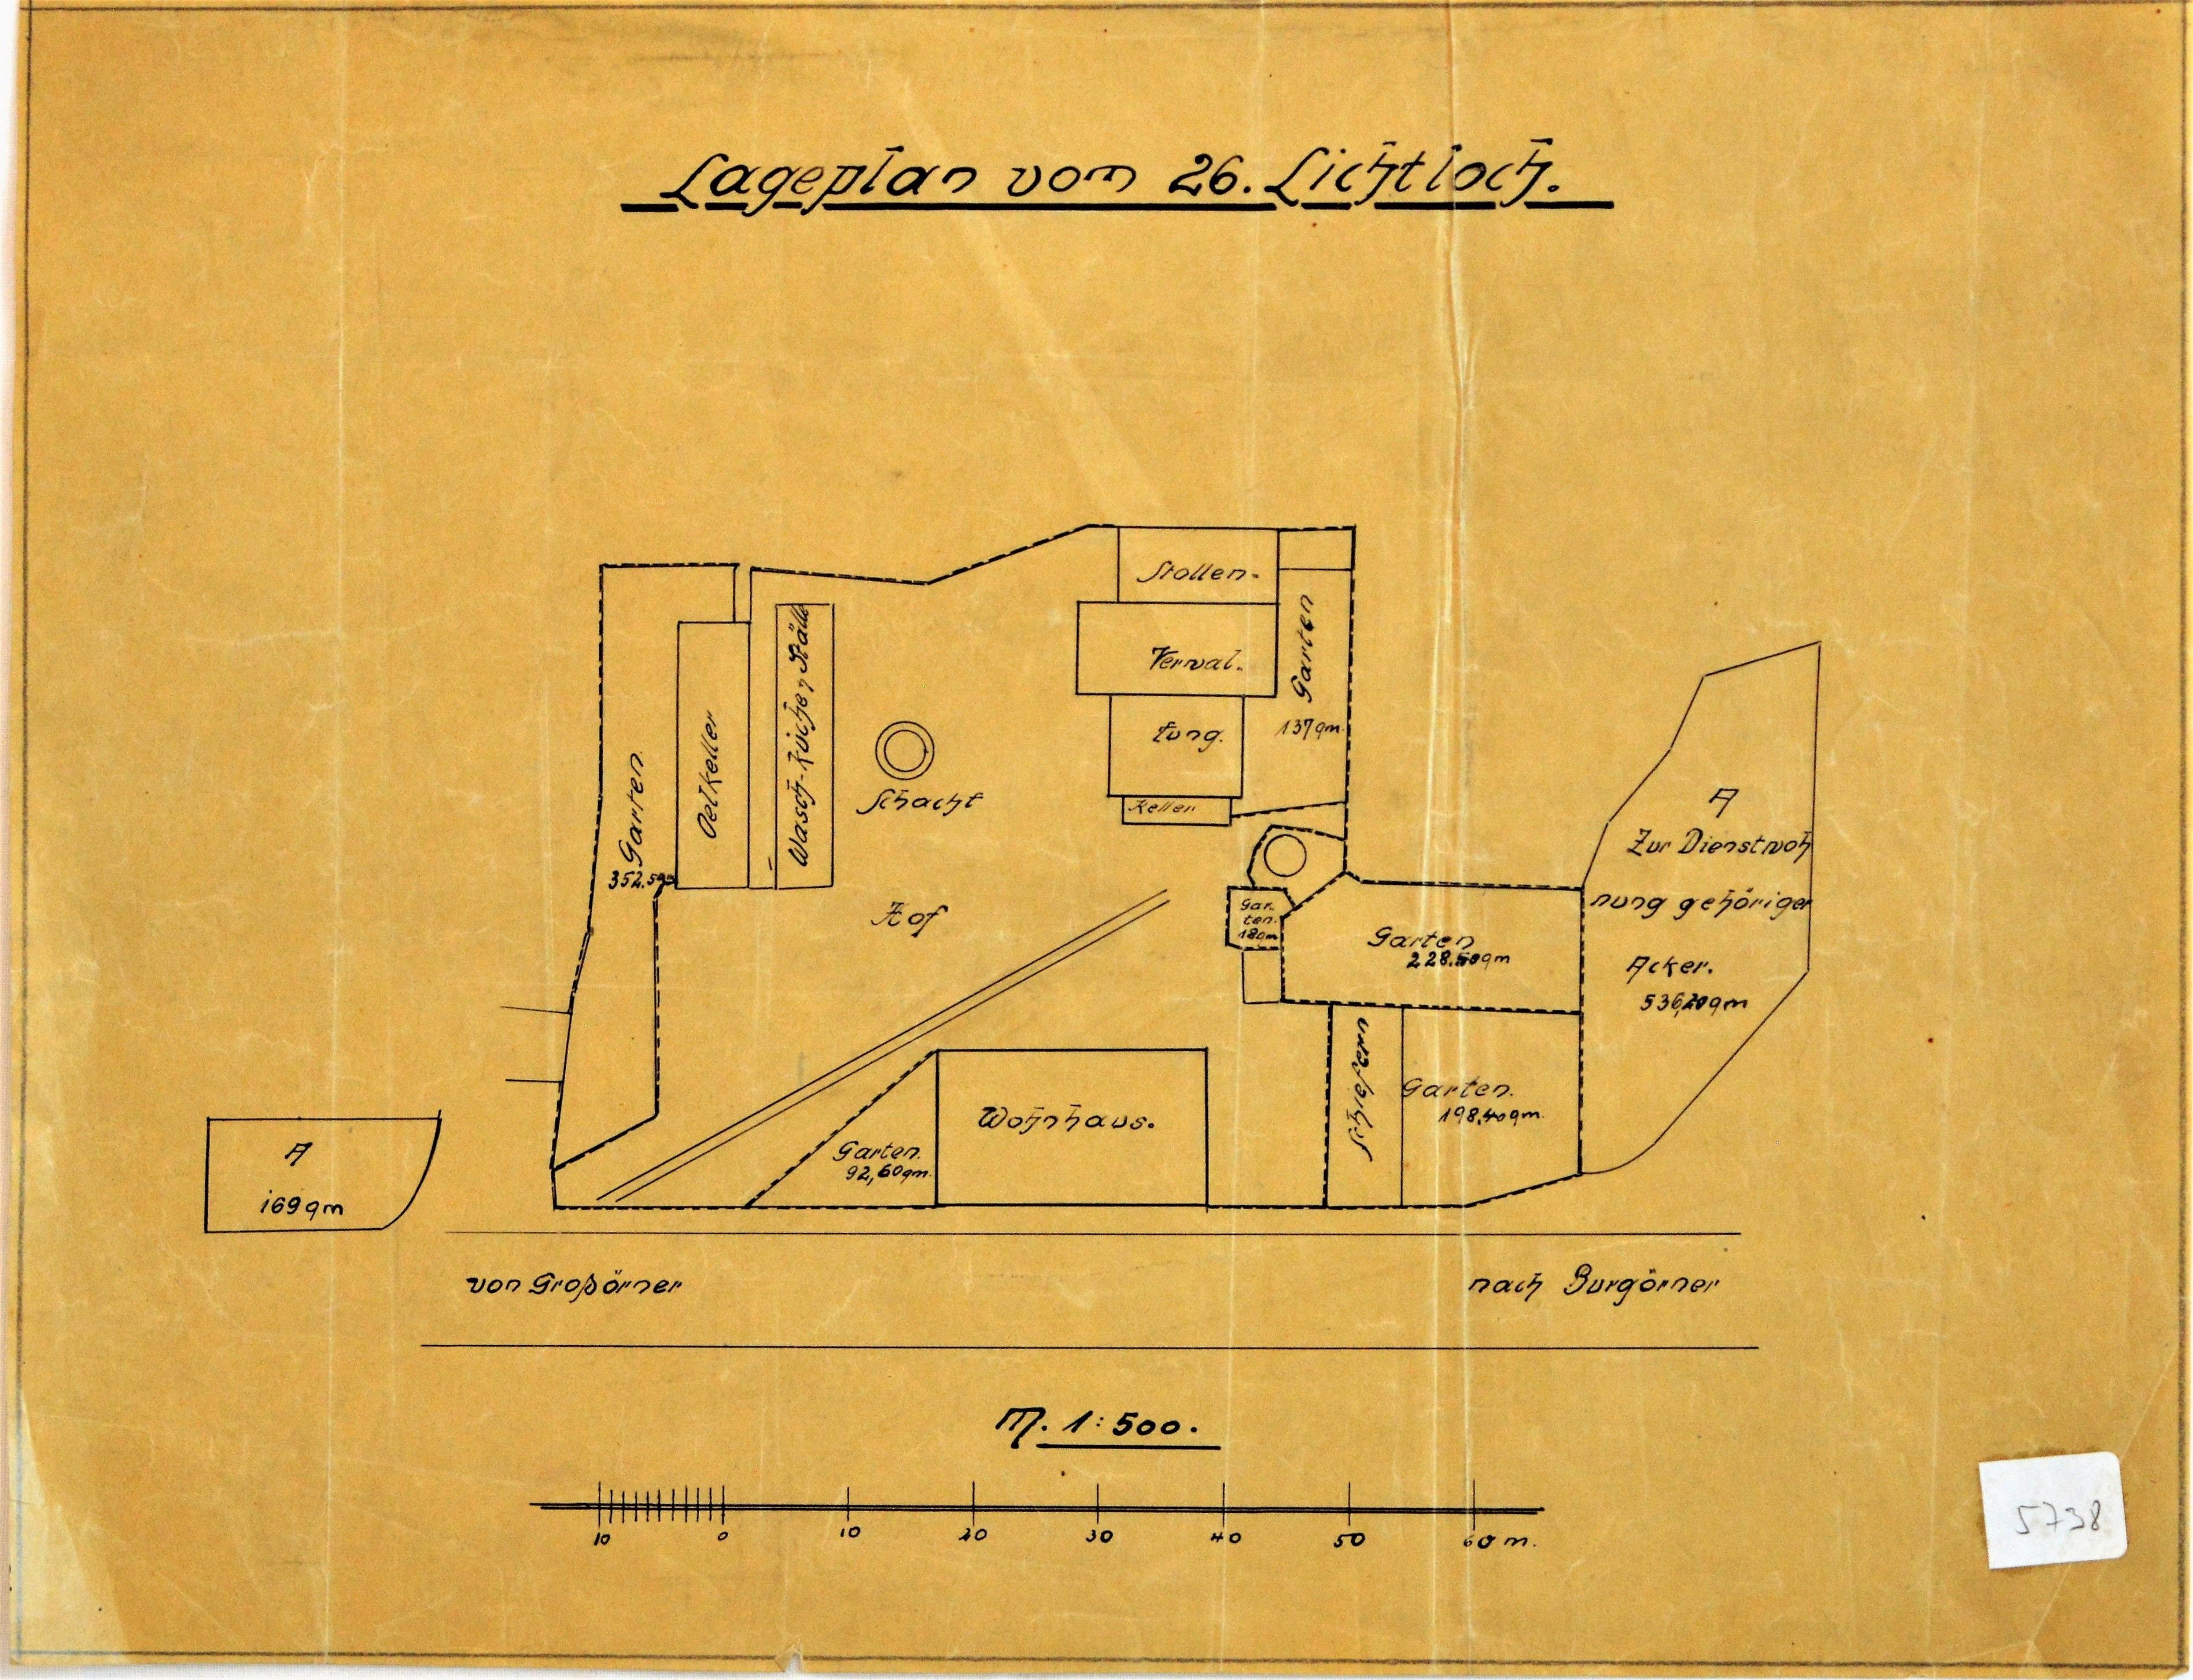 Lageplan vom 26. Lichtloch. (Mansfeld-Museum im Humboldt-Schloss CC BY-NC-SA)